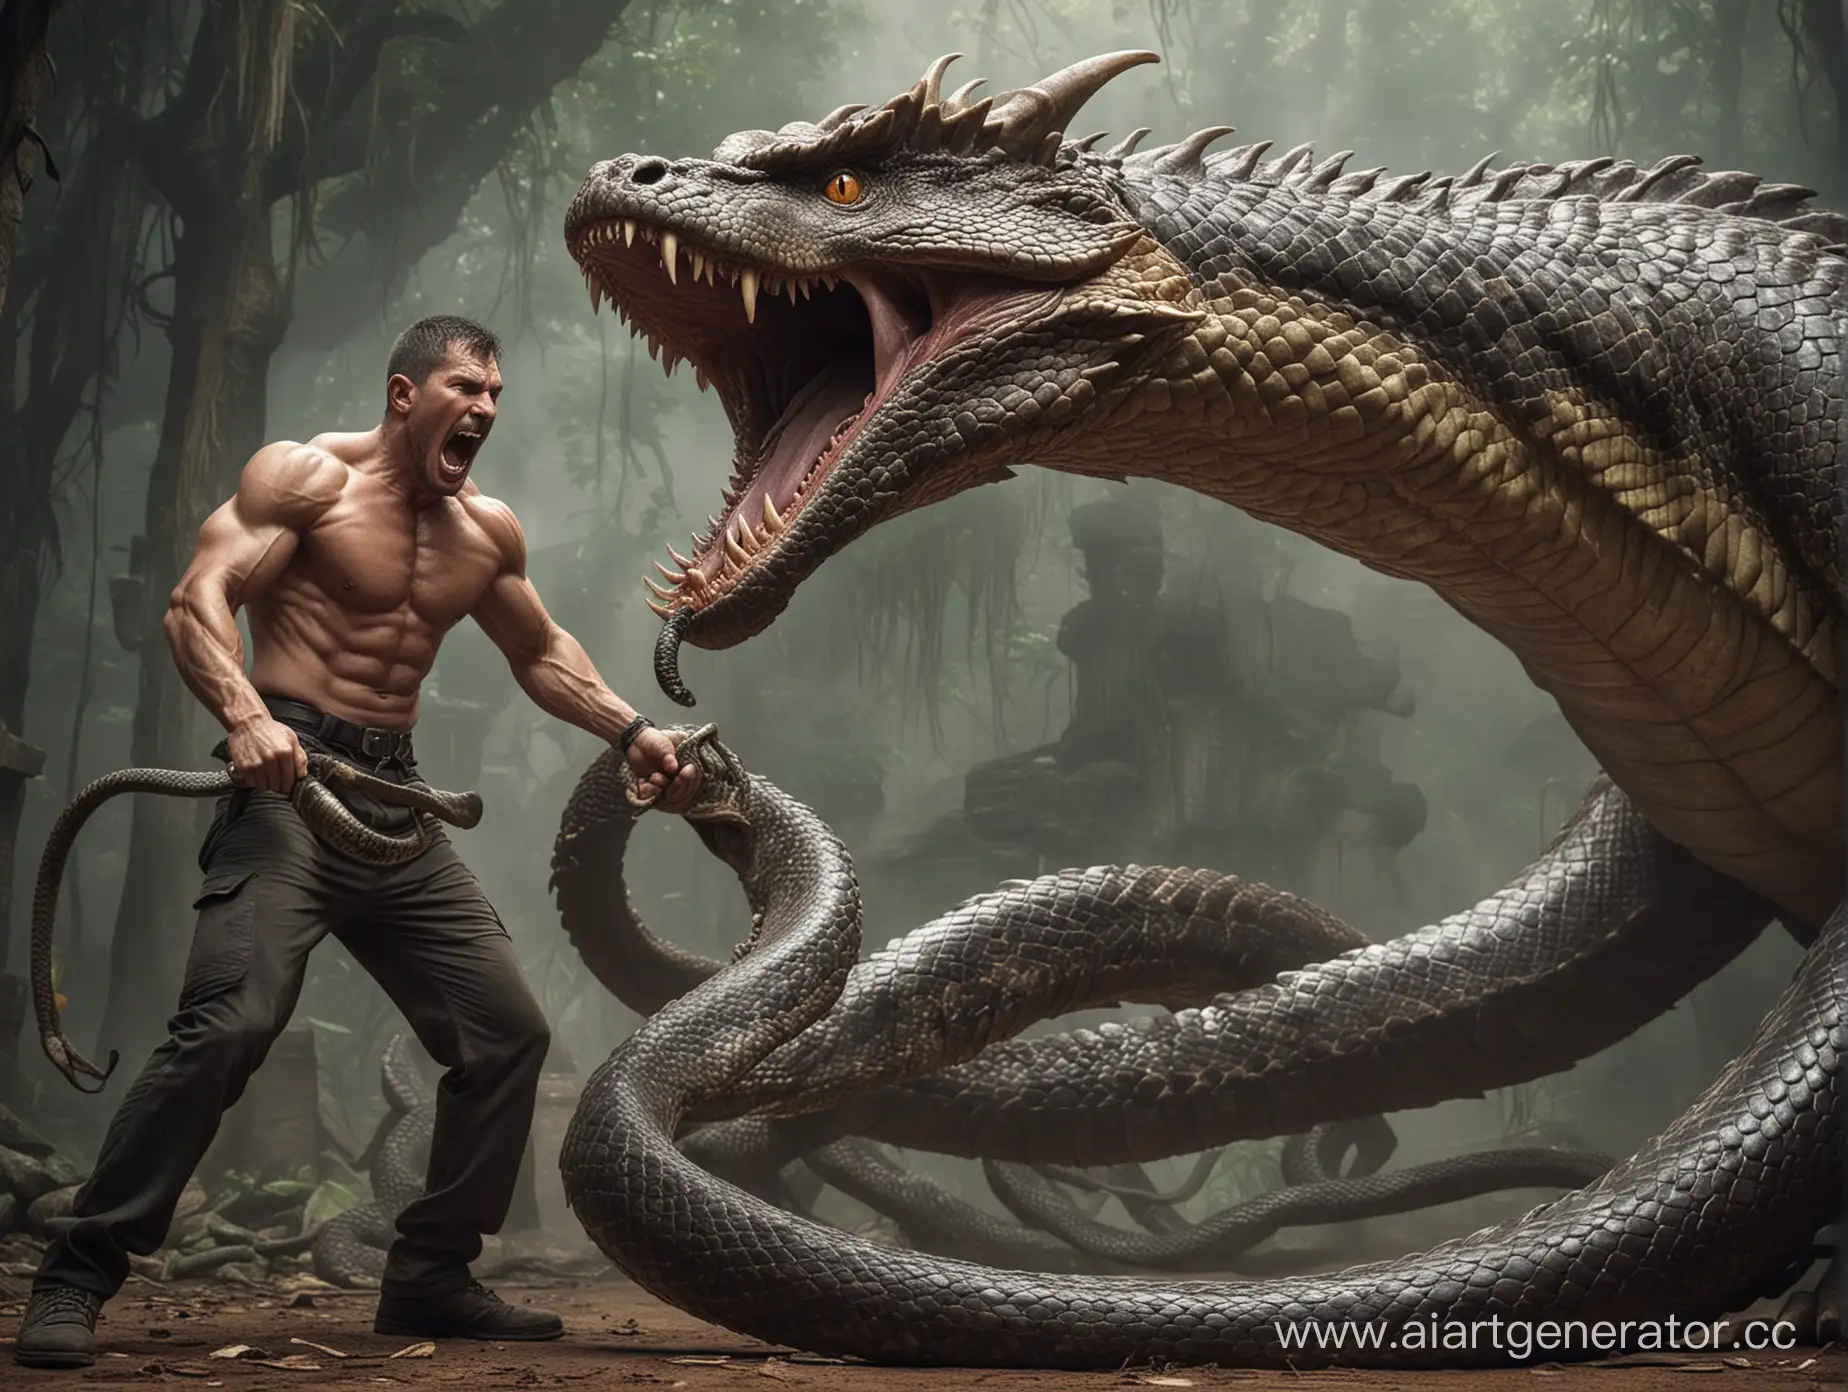 Muscular-Man-Confronts-Monstrous-DragonSnake-in-Intense-Struggle